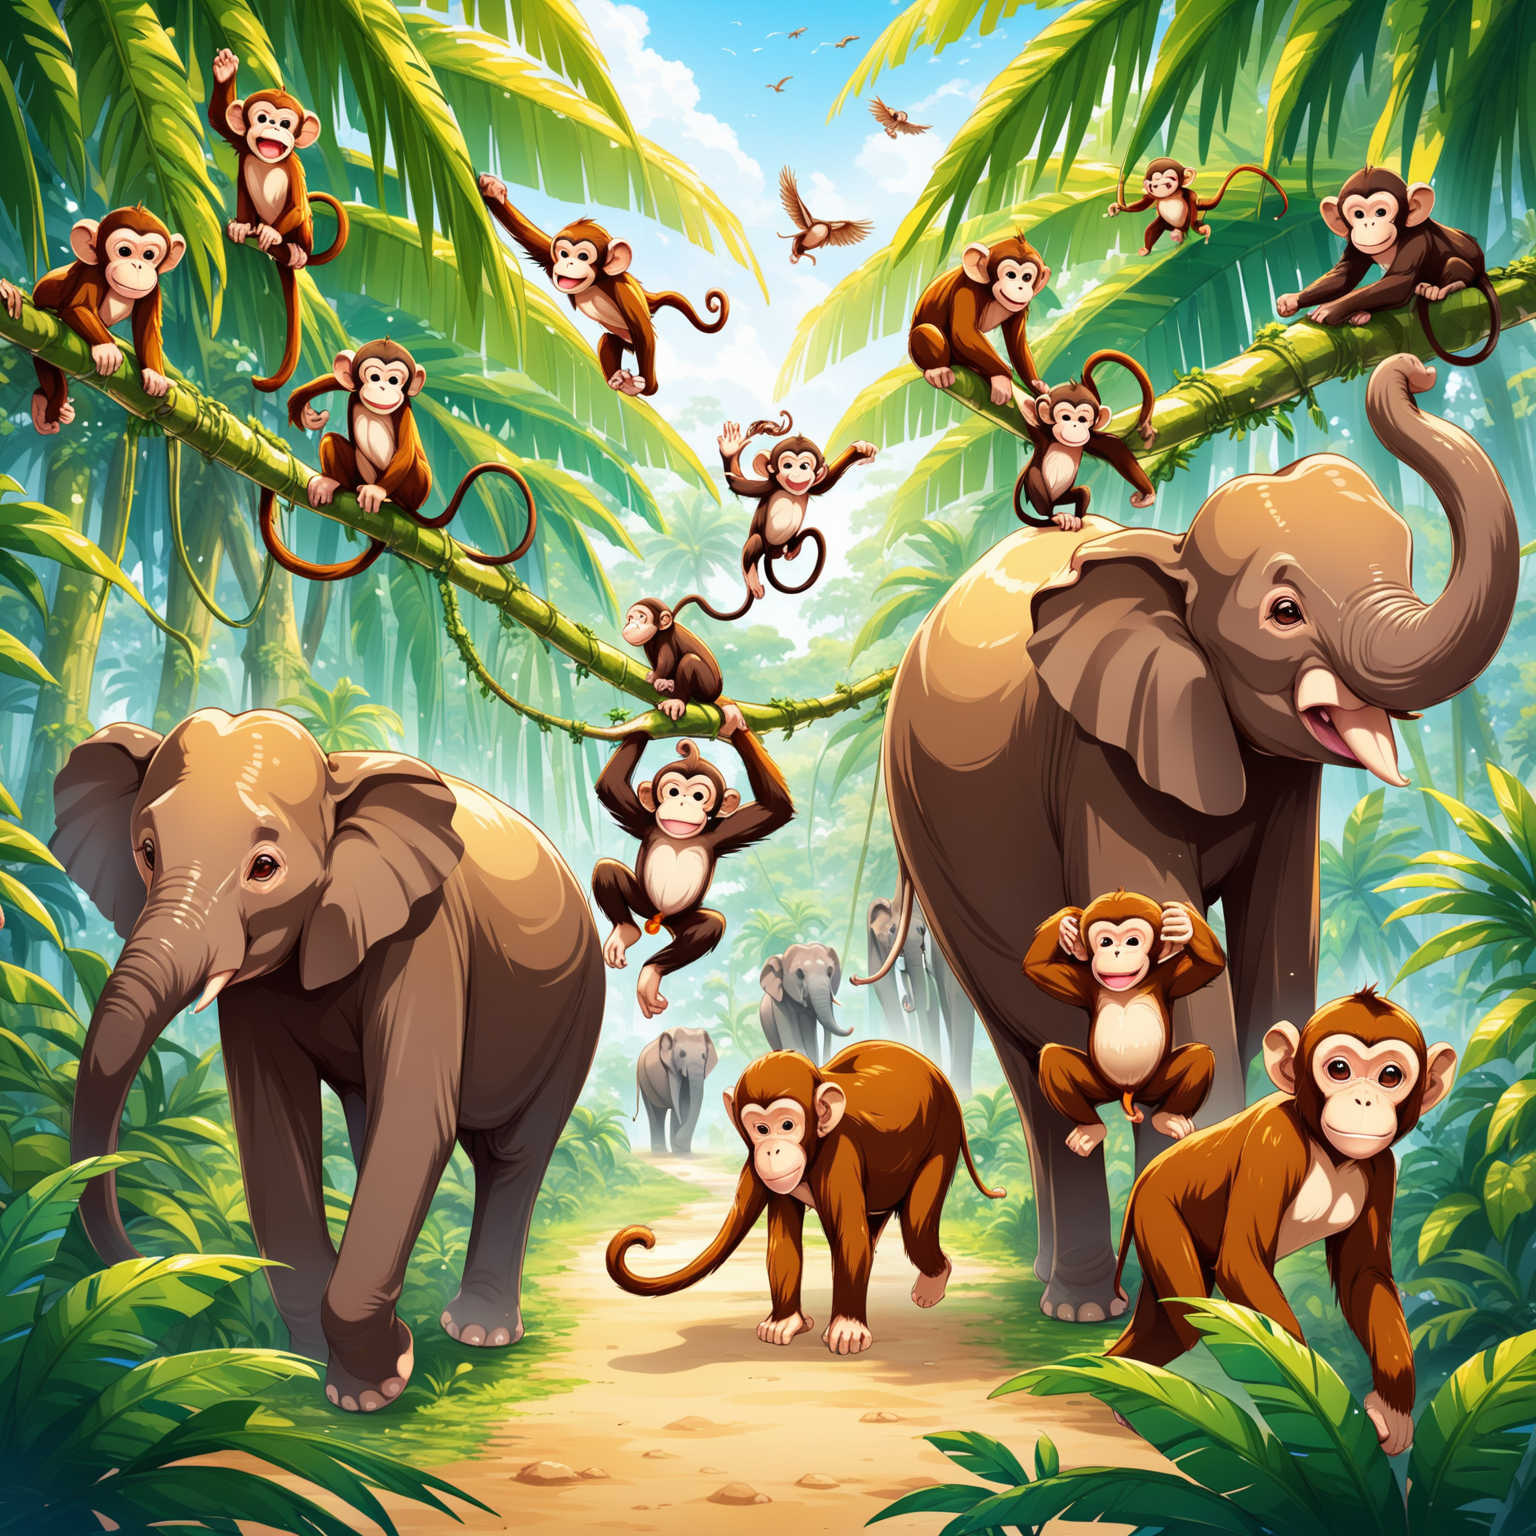 jungle safari with exotic creatures, monkeys, elephants, monkeys